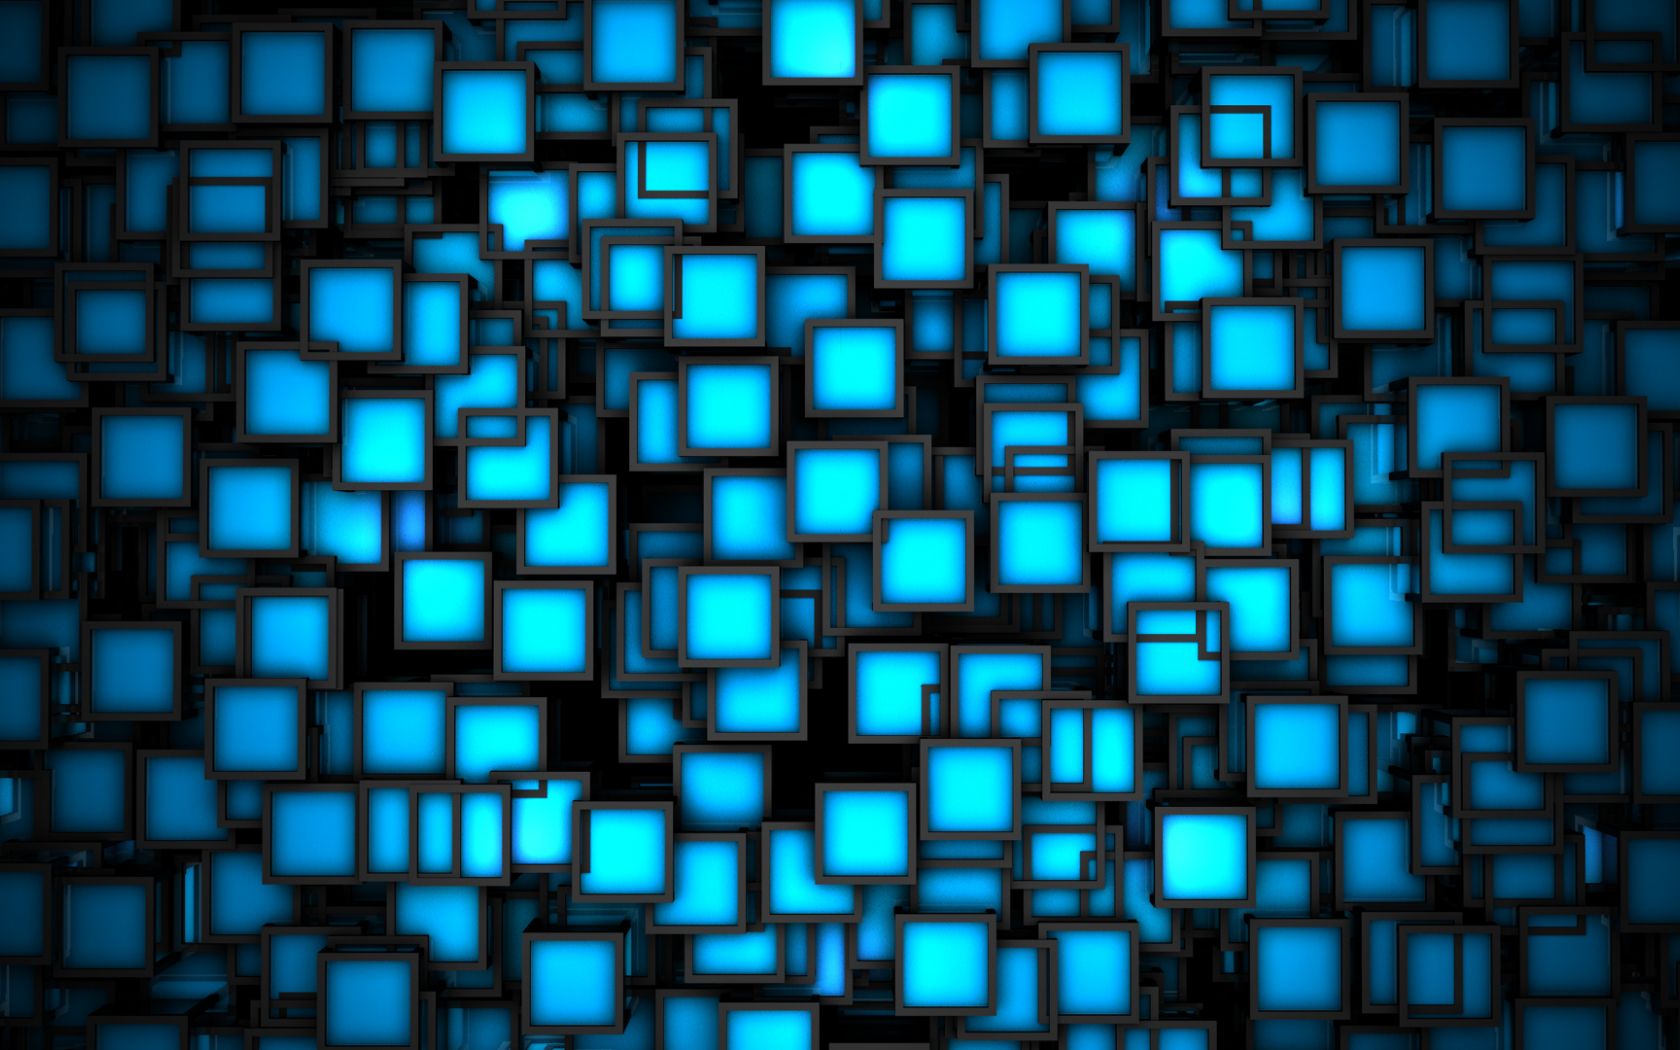 1680x1050 Free Download Black 3d Blue Neon Super Cool Cubes Hd Wallpaper 5728 Hd Wallpaper 1920x1080 For Your Desktop Mobile Tablet Explore Cool Wallpaper Neon Awesome Neon Wallpaper Neon